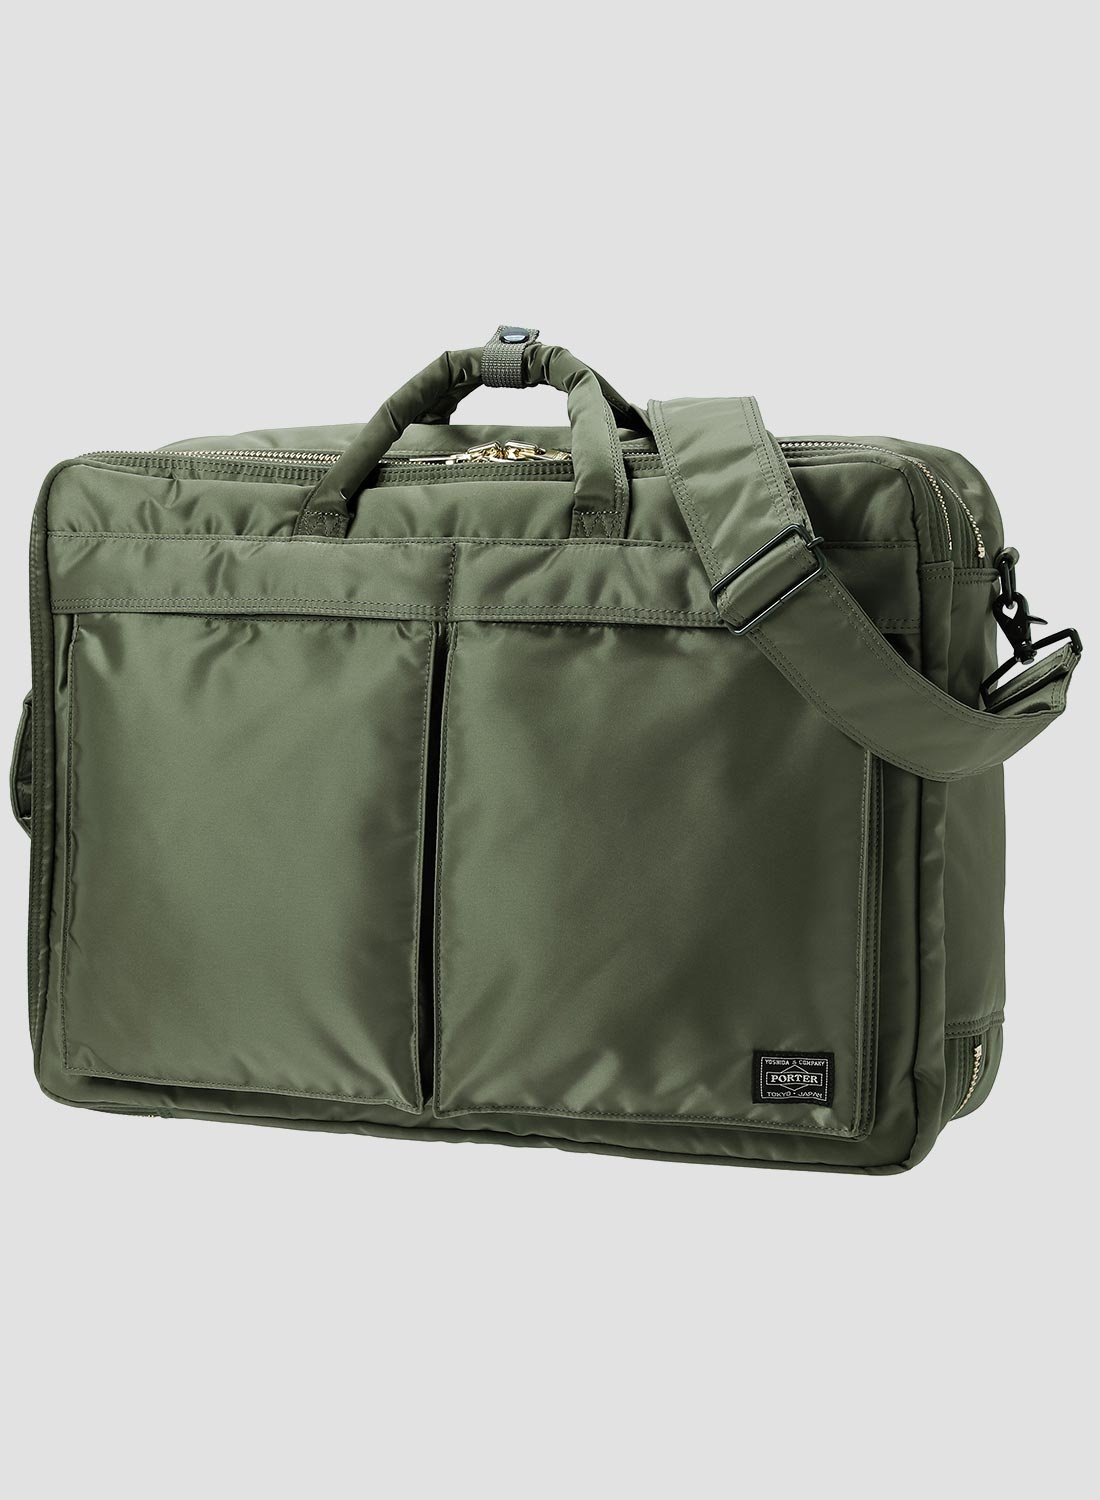 Porter-Yoshida & Co Tanker 3-Way Briefcase in Sage Green - 1